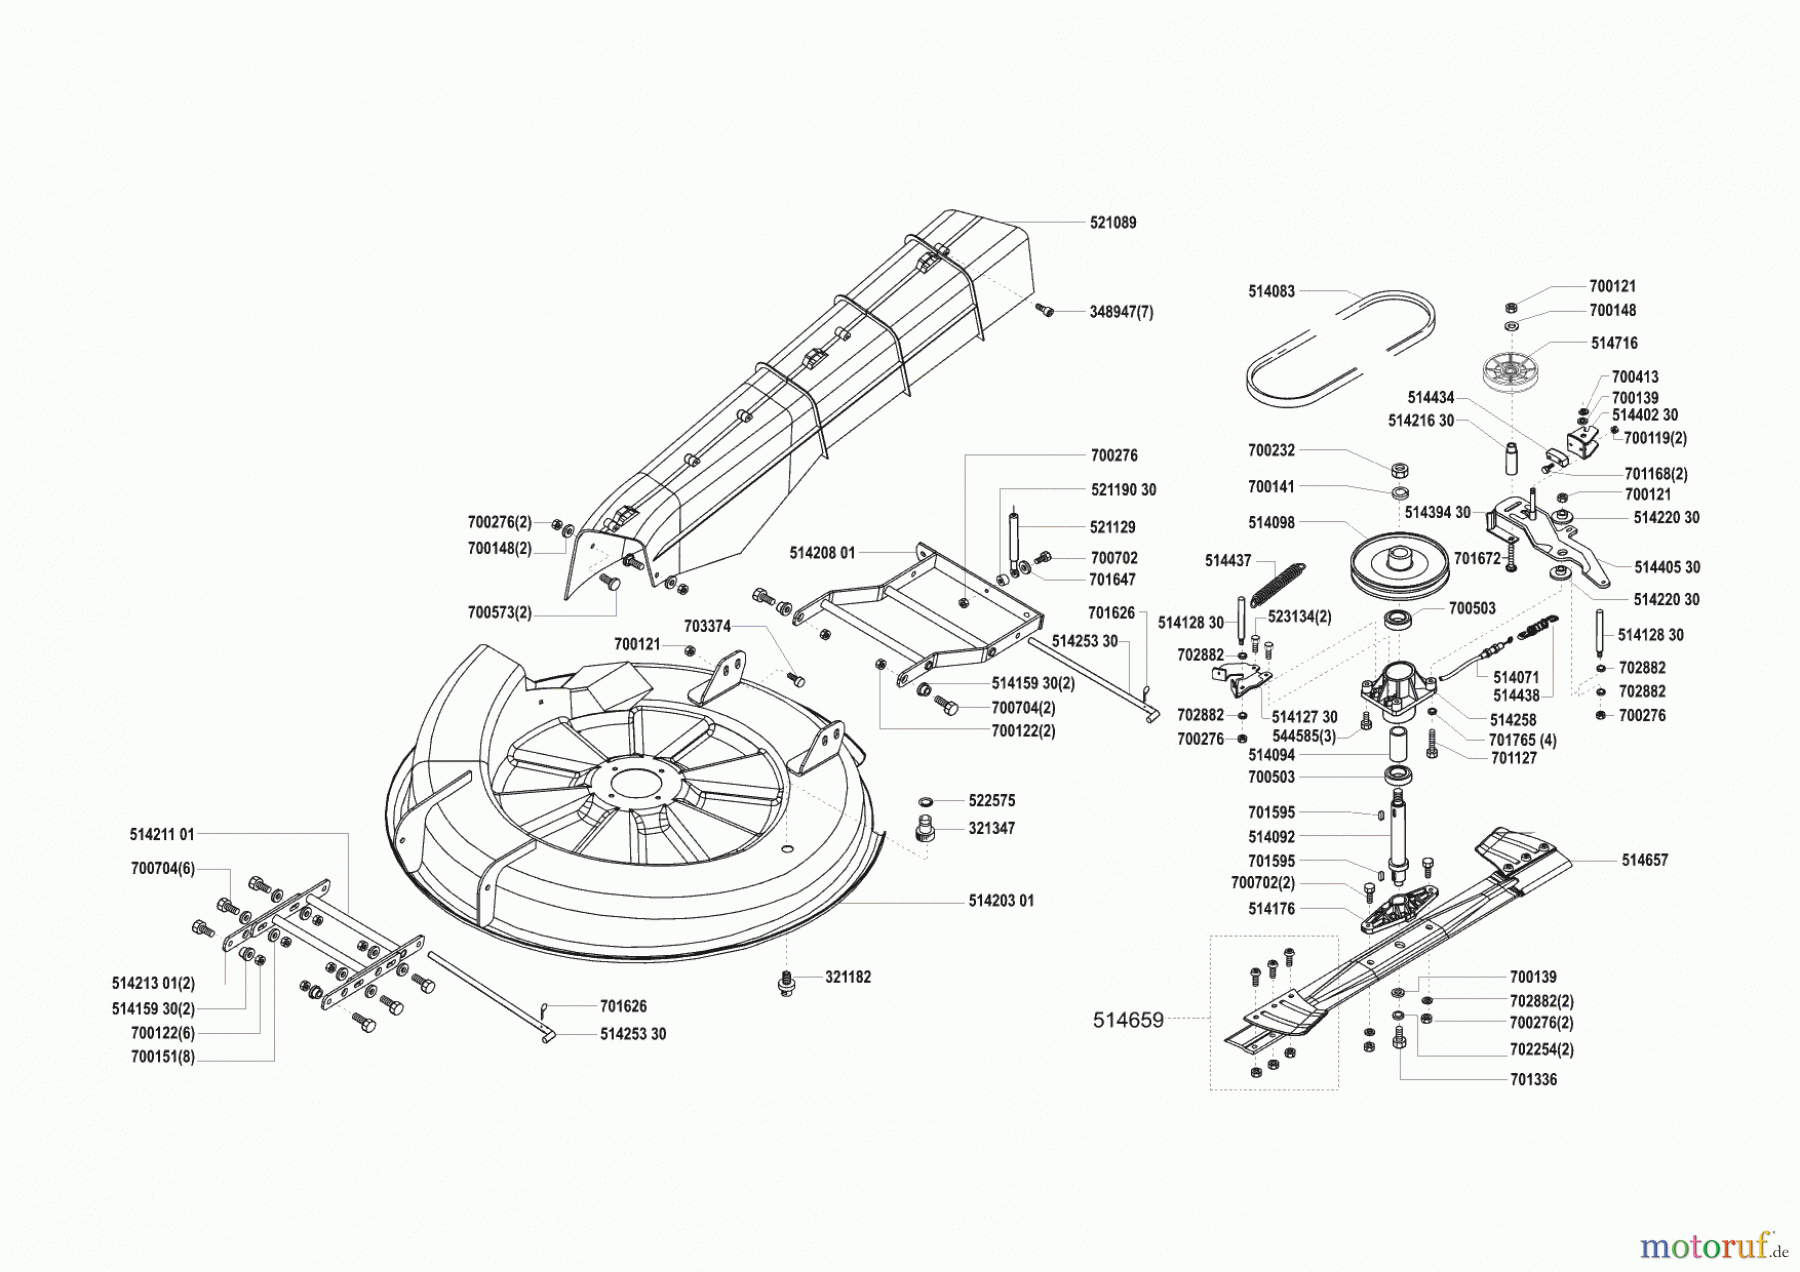  AL-KO Gartentechnik Rasentraktor T-800 09/2000 - 10/2000 Seite 5